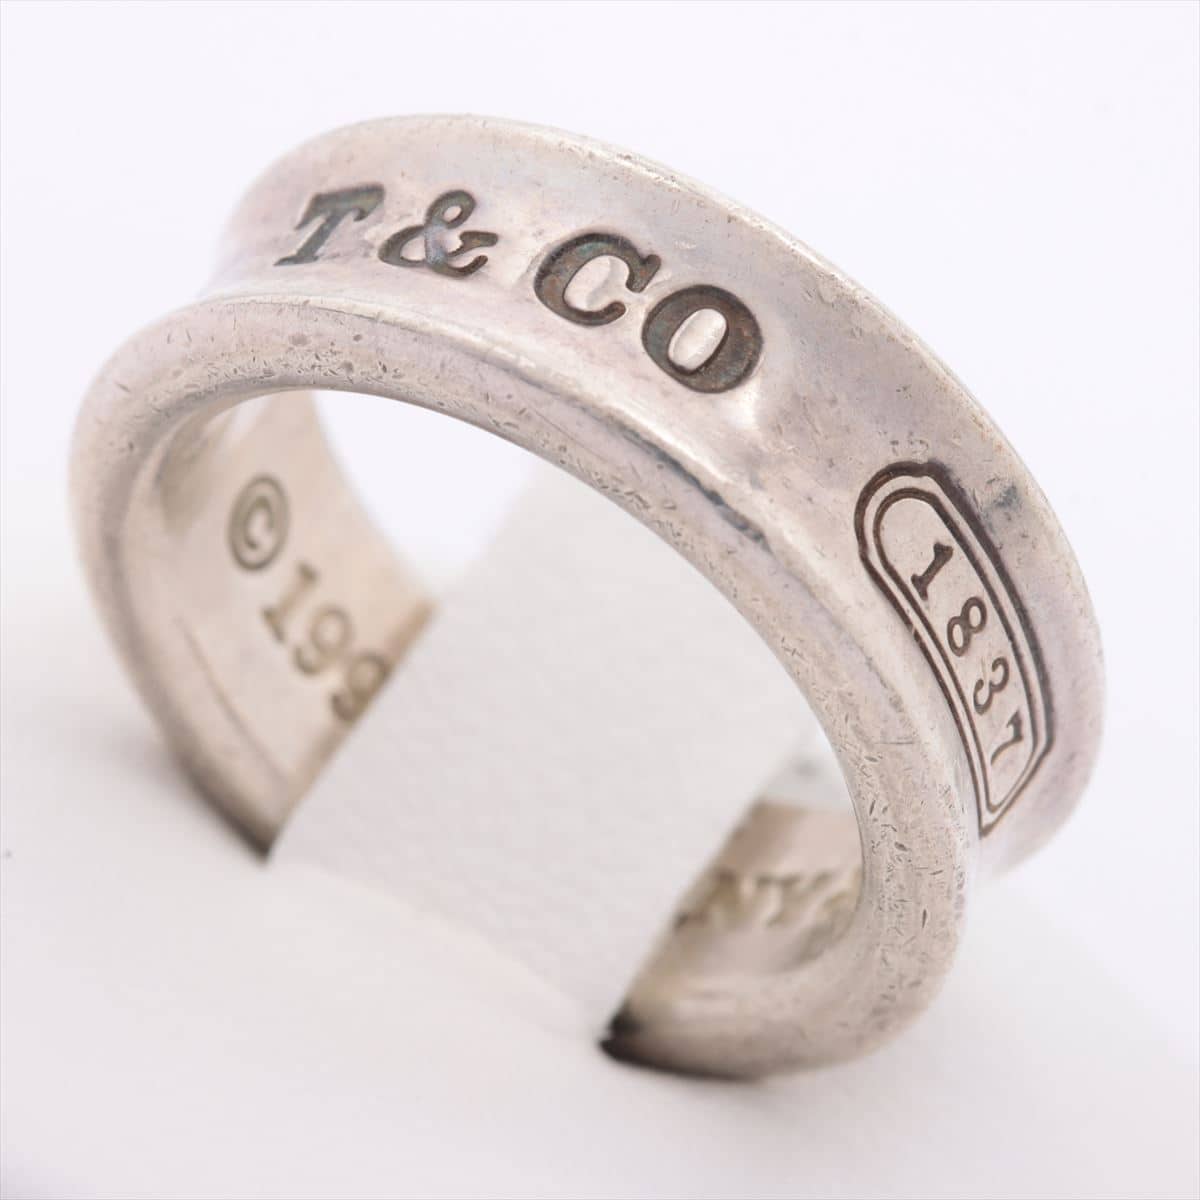 Tiffany 1837 Narrow rings 925 7.6g Silver